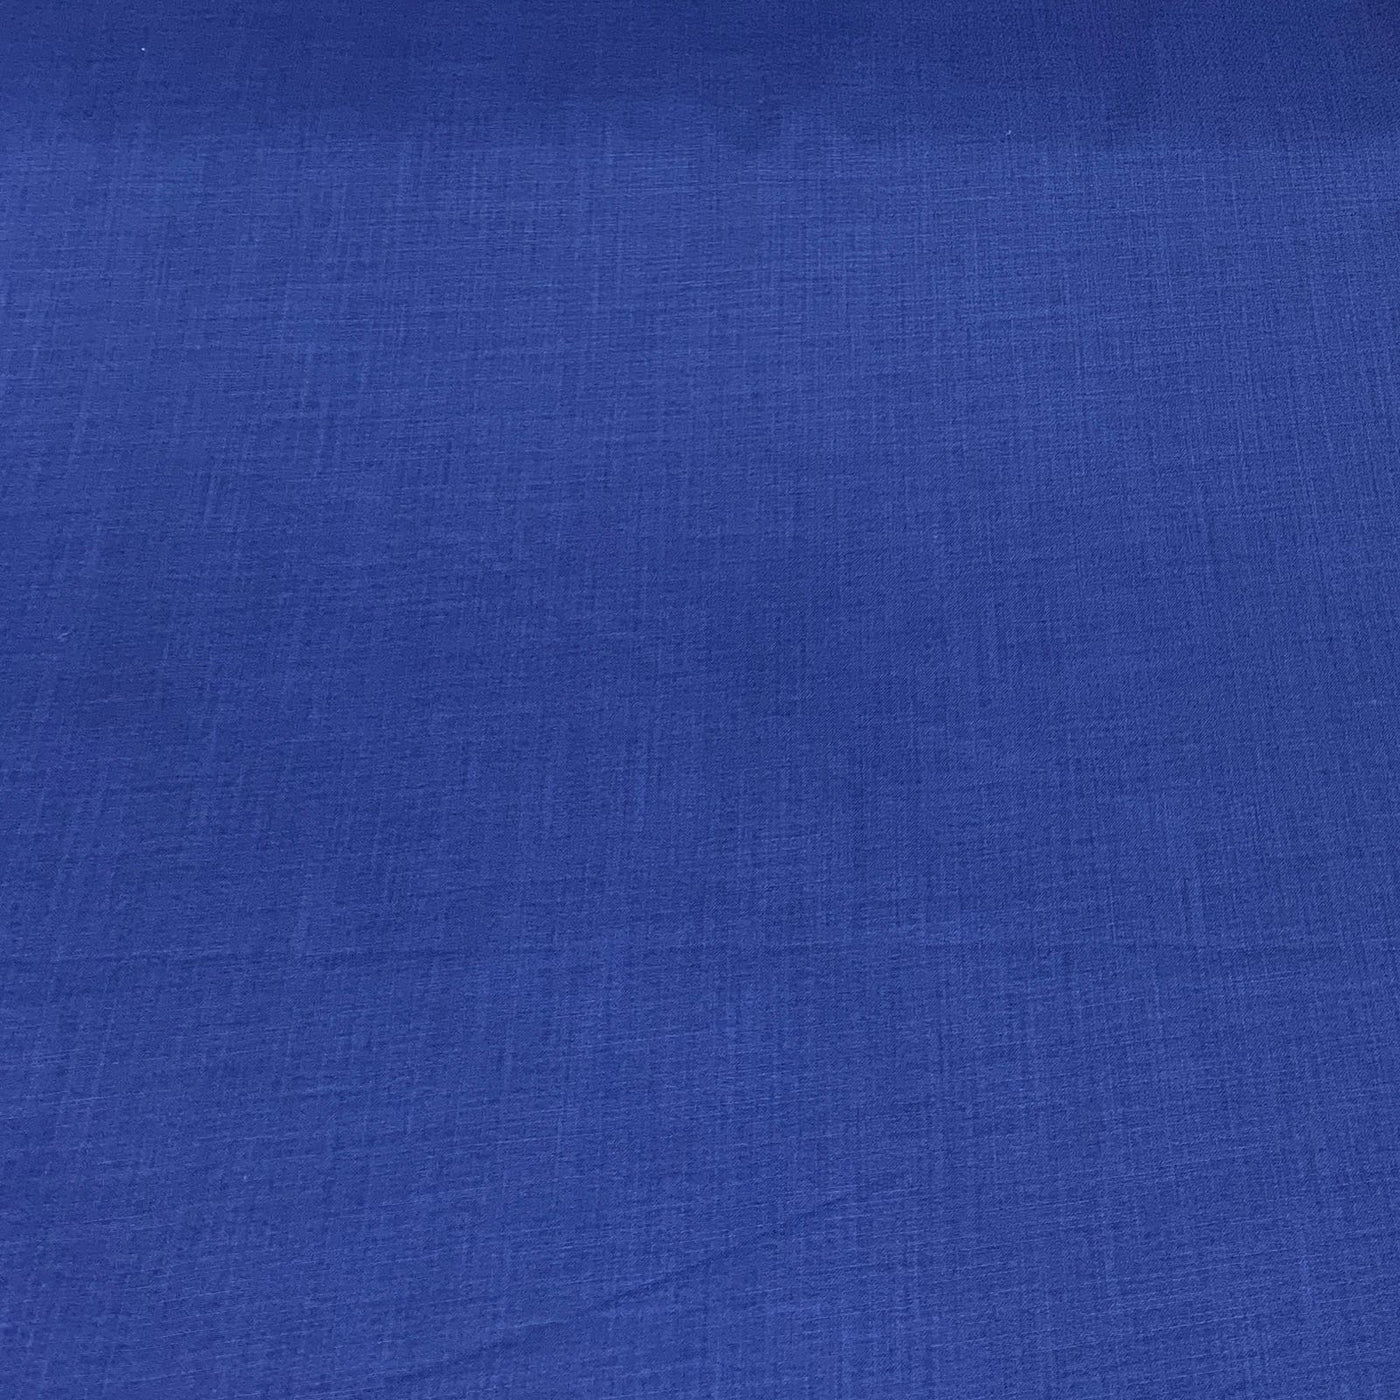 Navy Blue Plain Cotton Matka Fabric